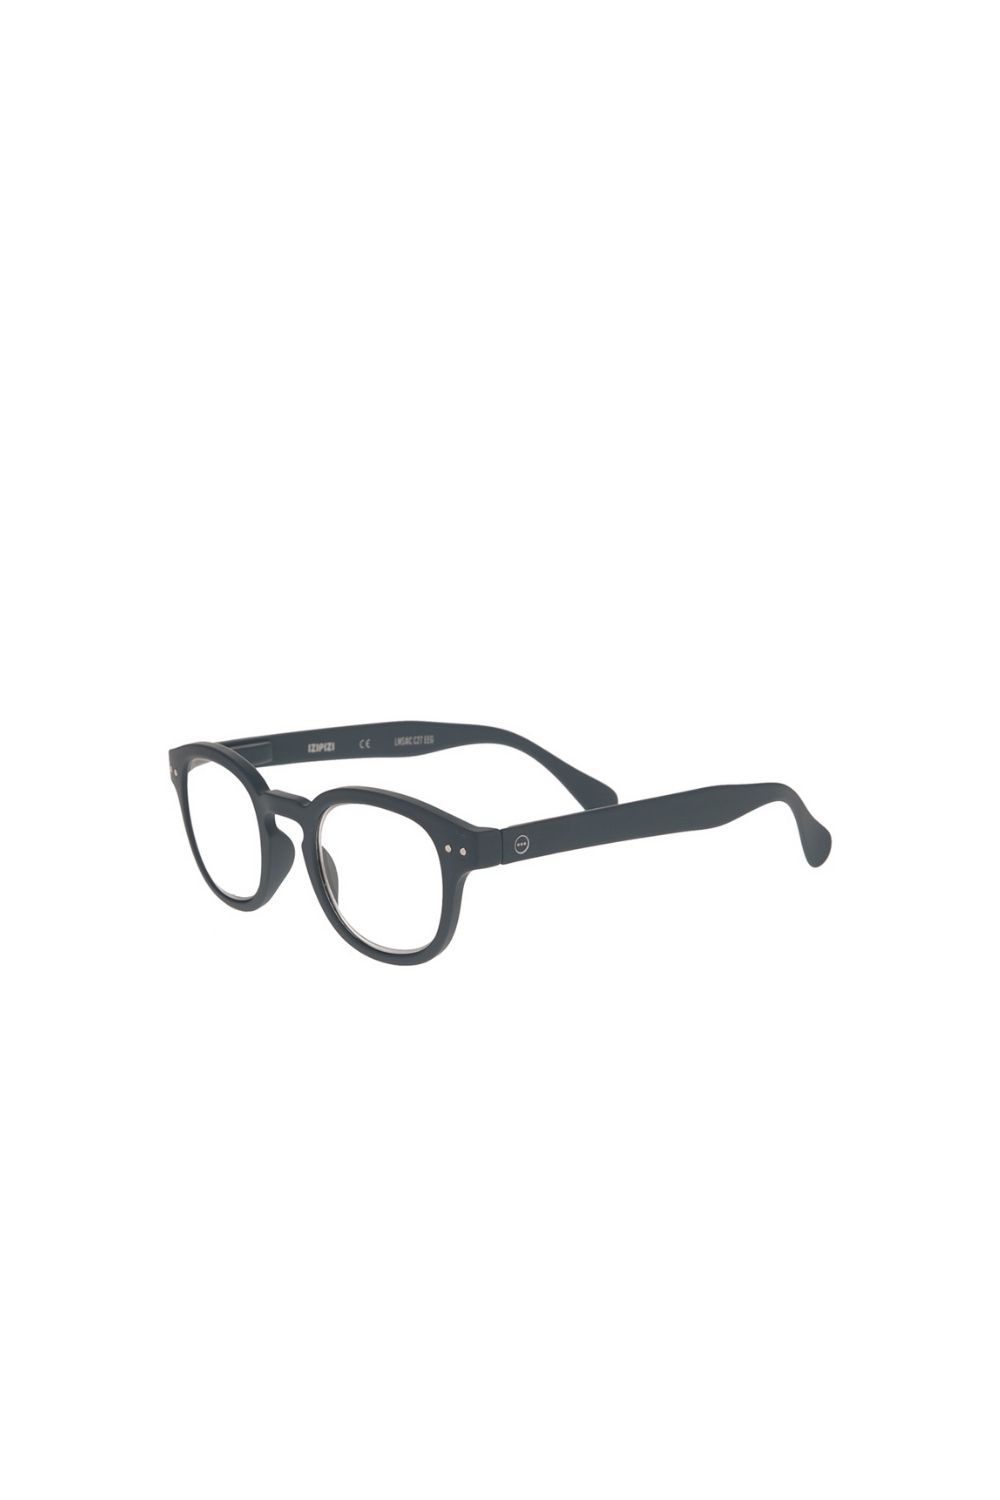 IZIPIZI – Unisex γυαλιά οράσεως IZIPIZI READING #C γκρι 1652852.0-00G0